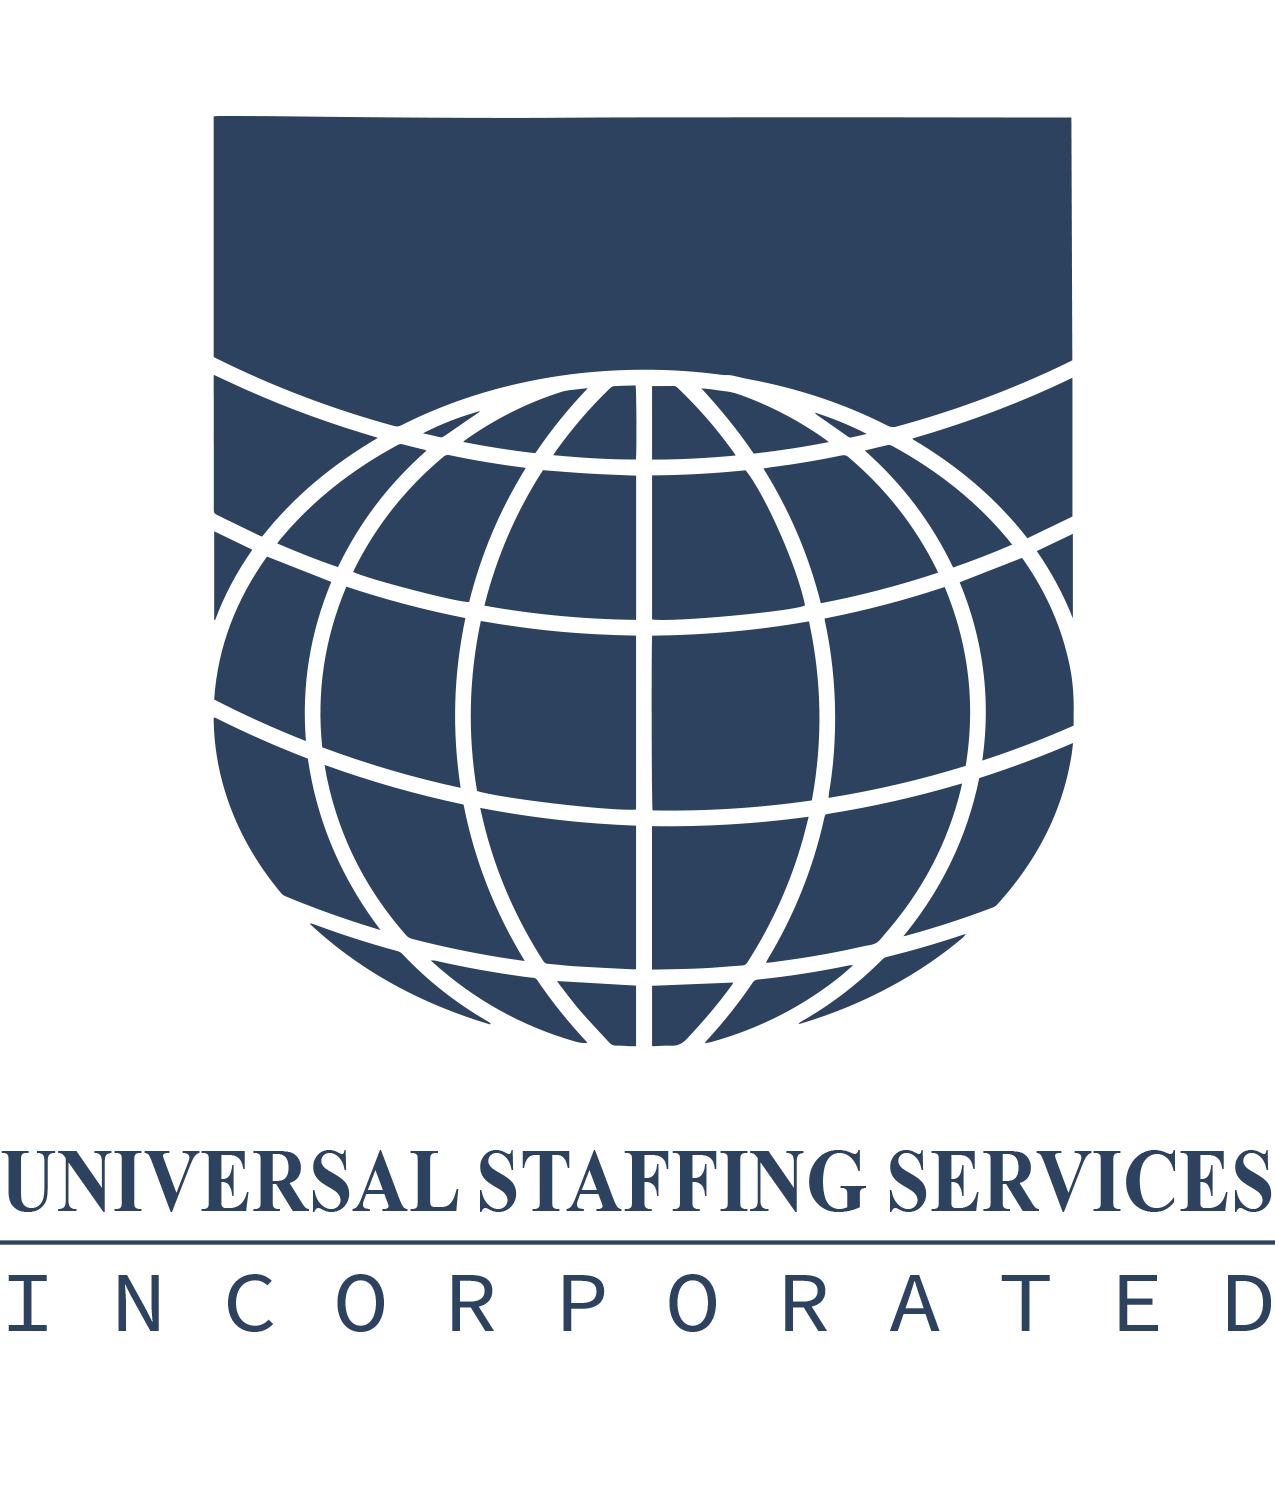 Universal Staffing Services Inc logo